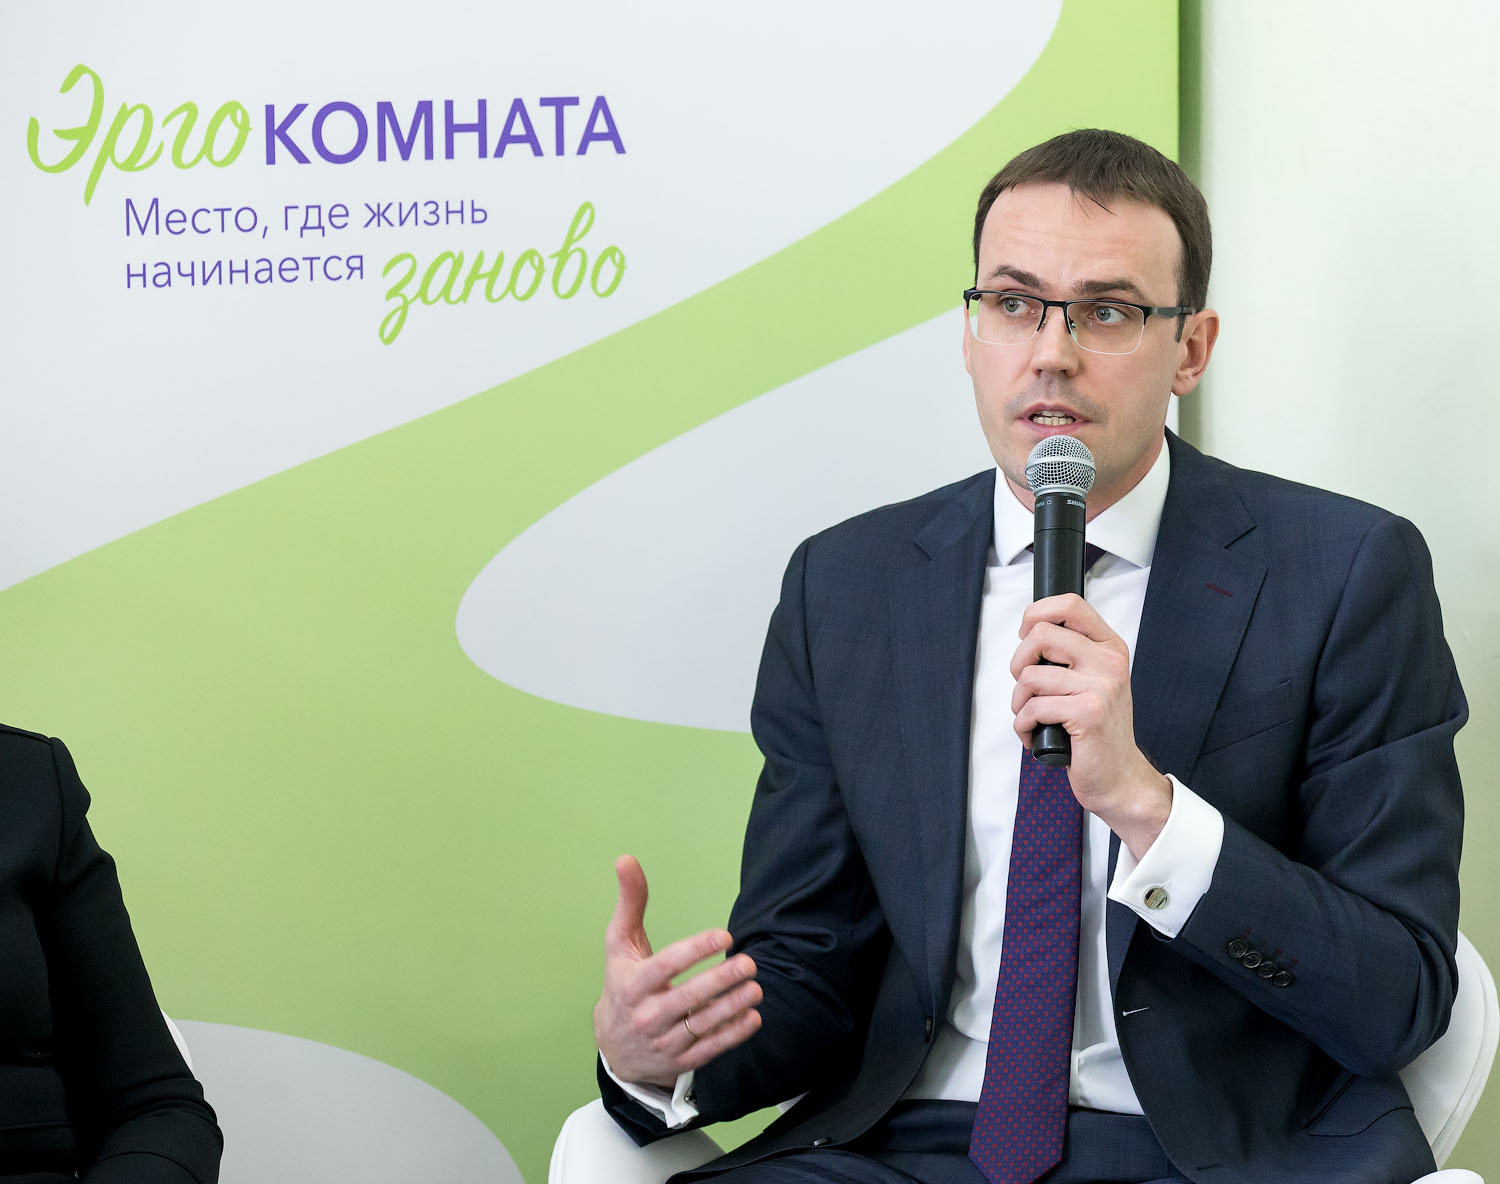 Дмитрий Колода, медицинский директор компании «Такеда»